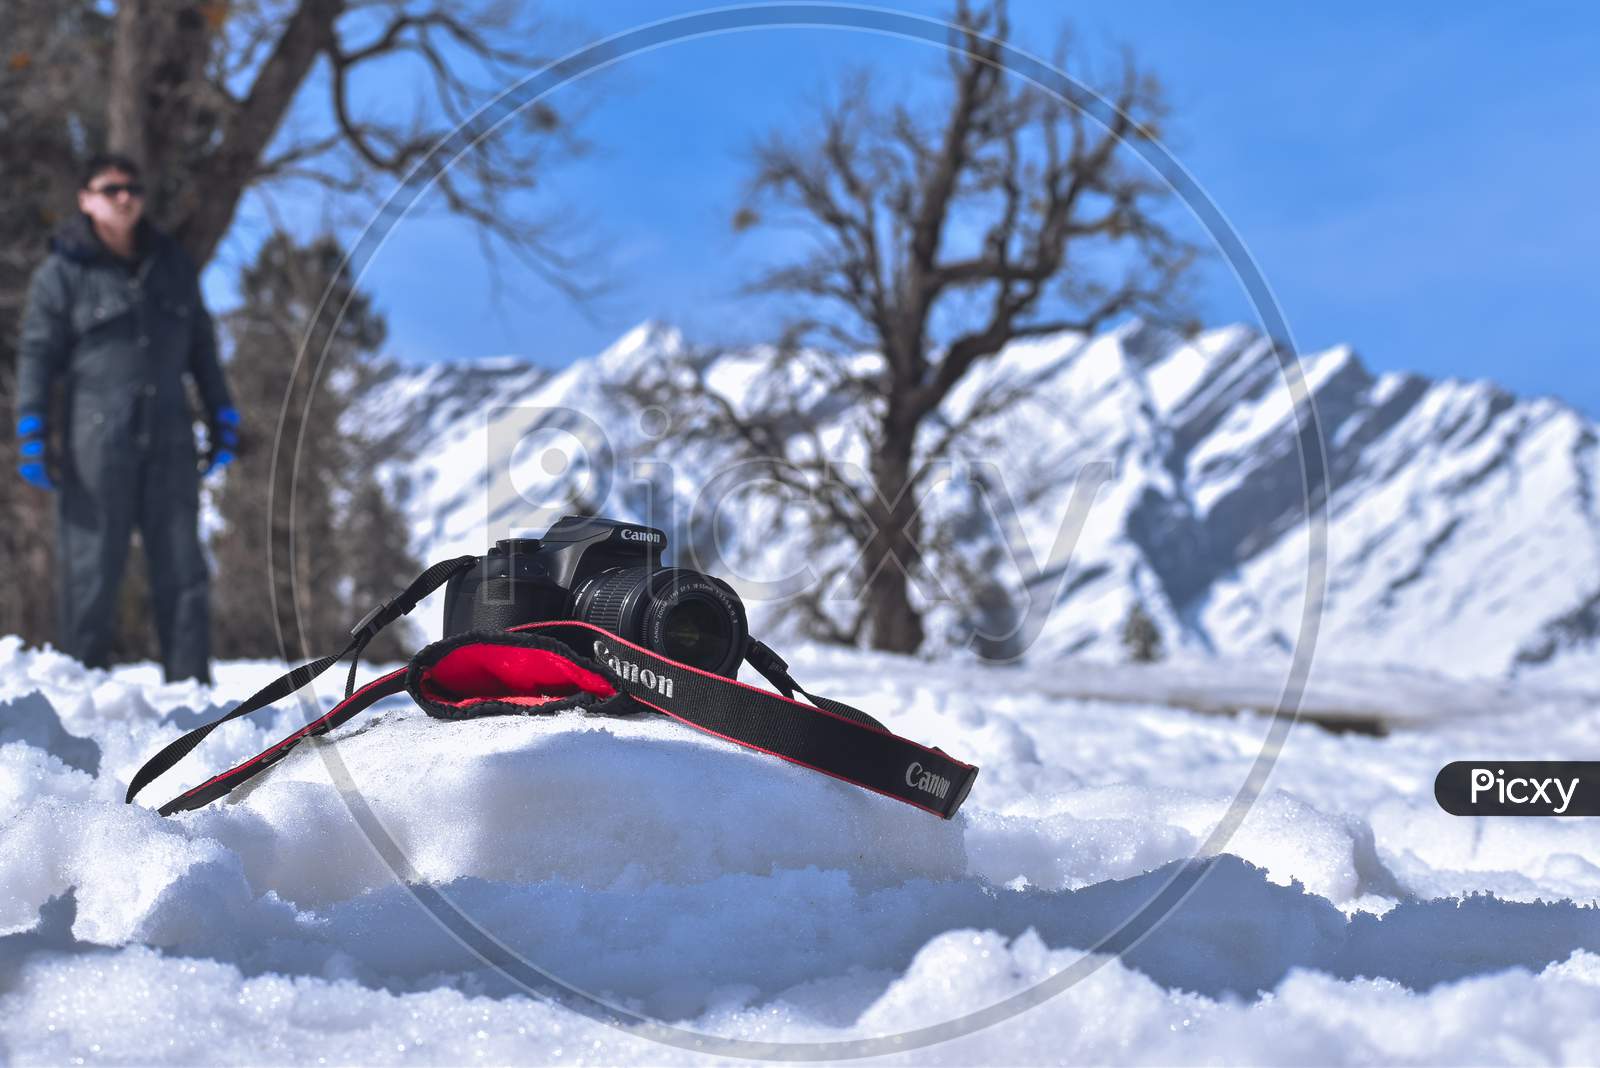 camera on the snow